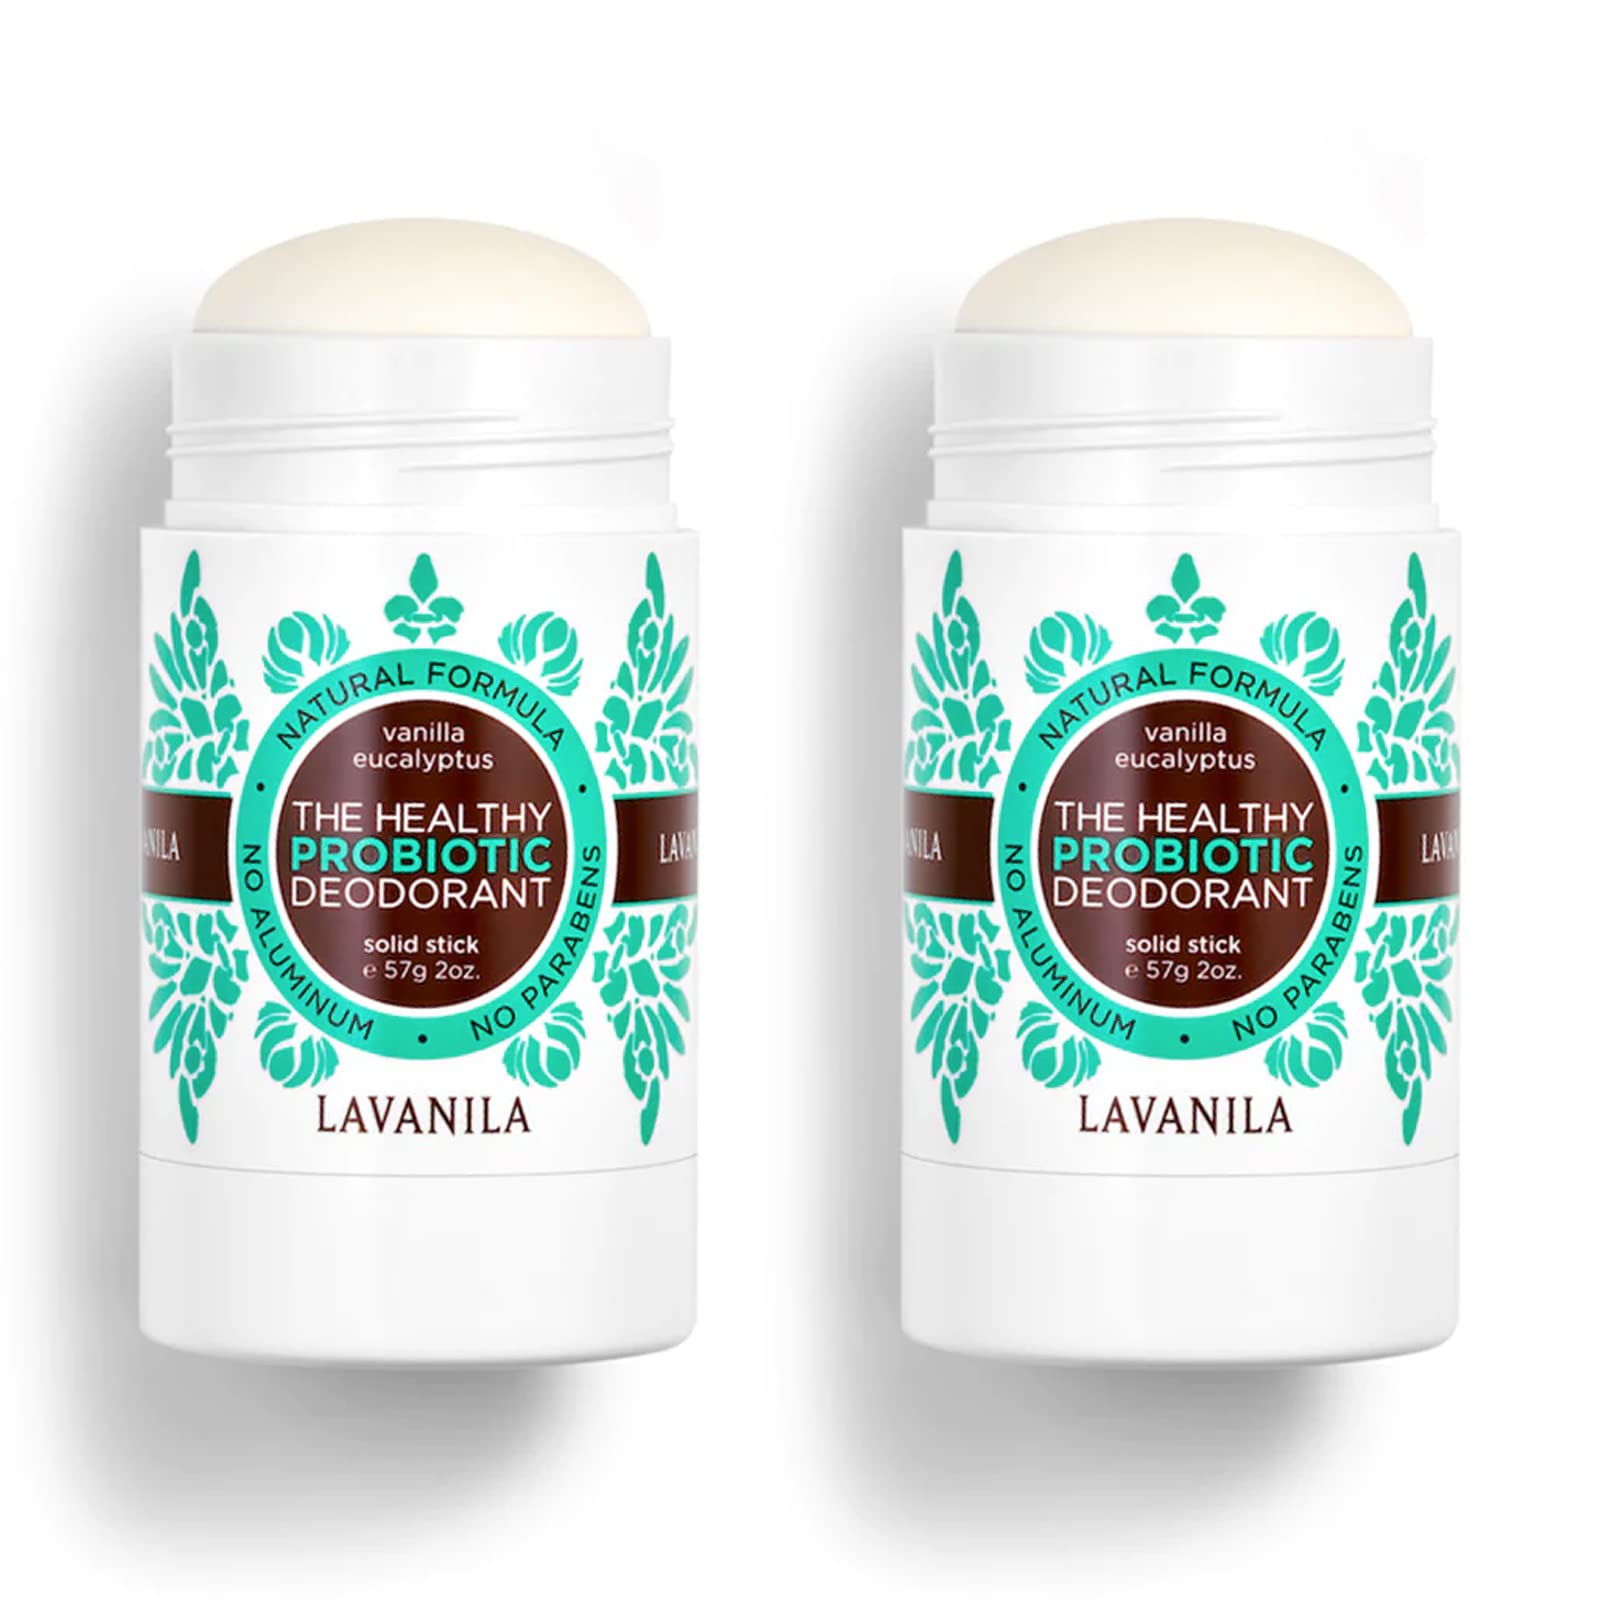 Lavanila The Healthy Probiotic Deodorant, Vanilla Eucalyptus 2oz, pack - and Baking Soda Free Deodorant for Men and Women, Long Lasting Odor Protection, Solid Vegan